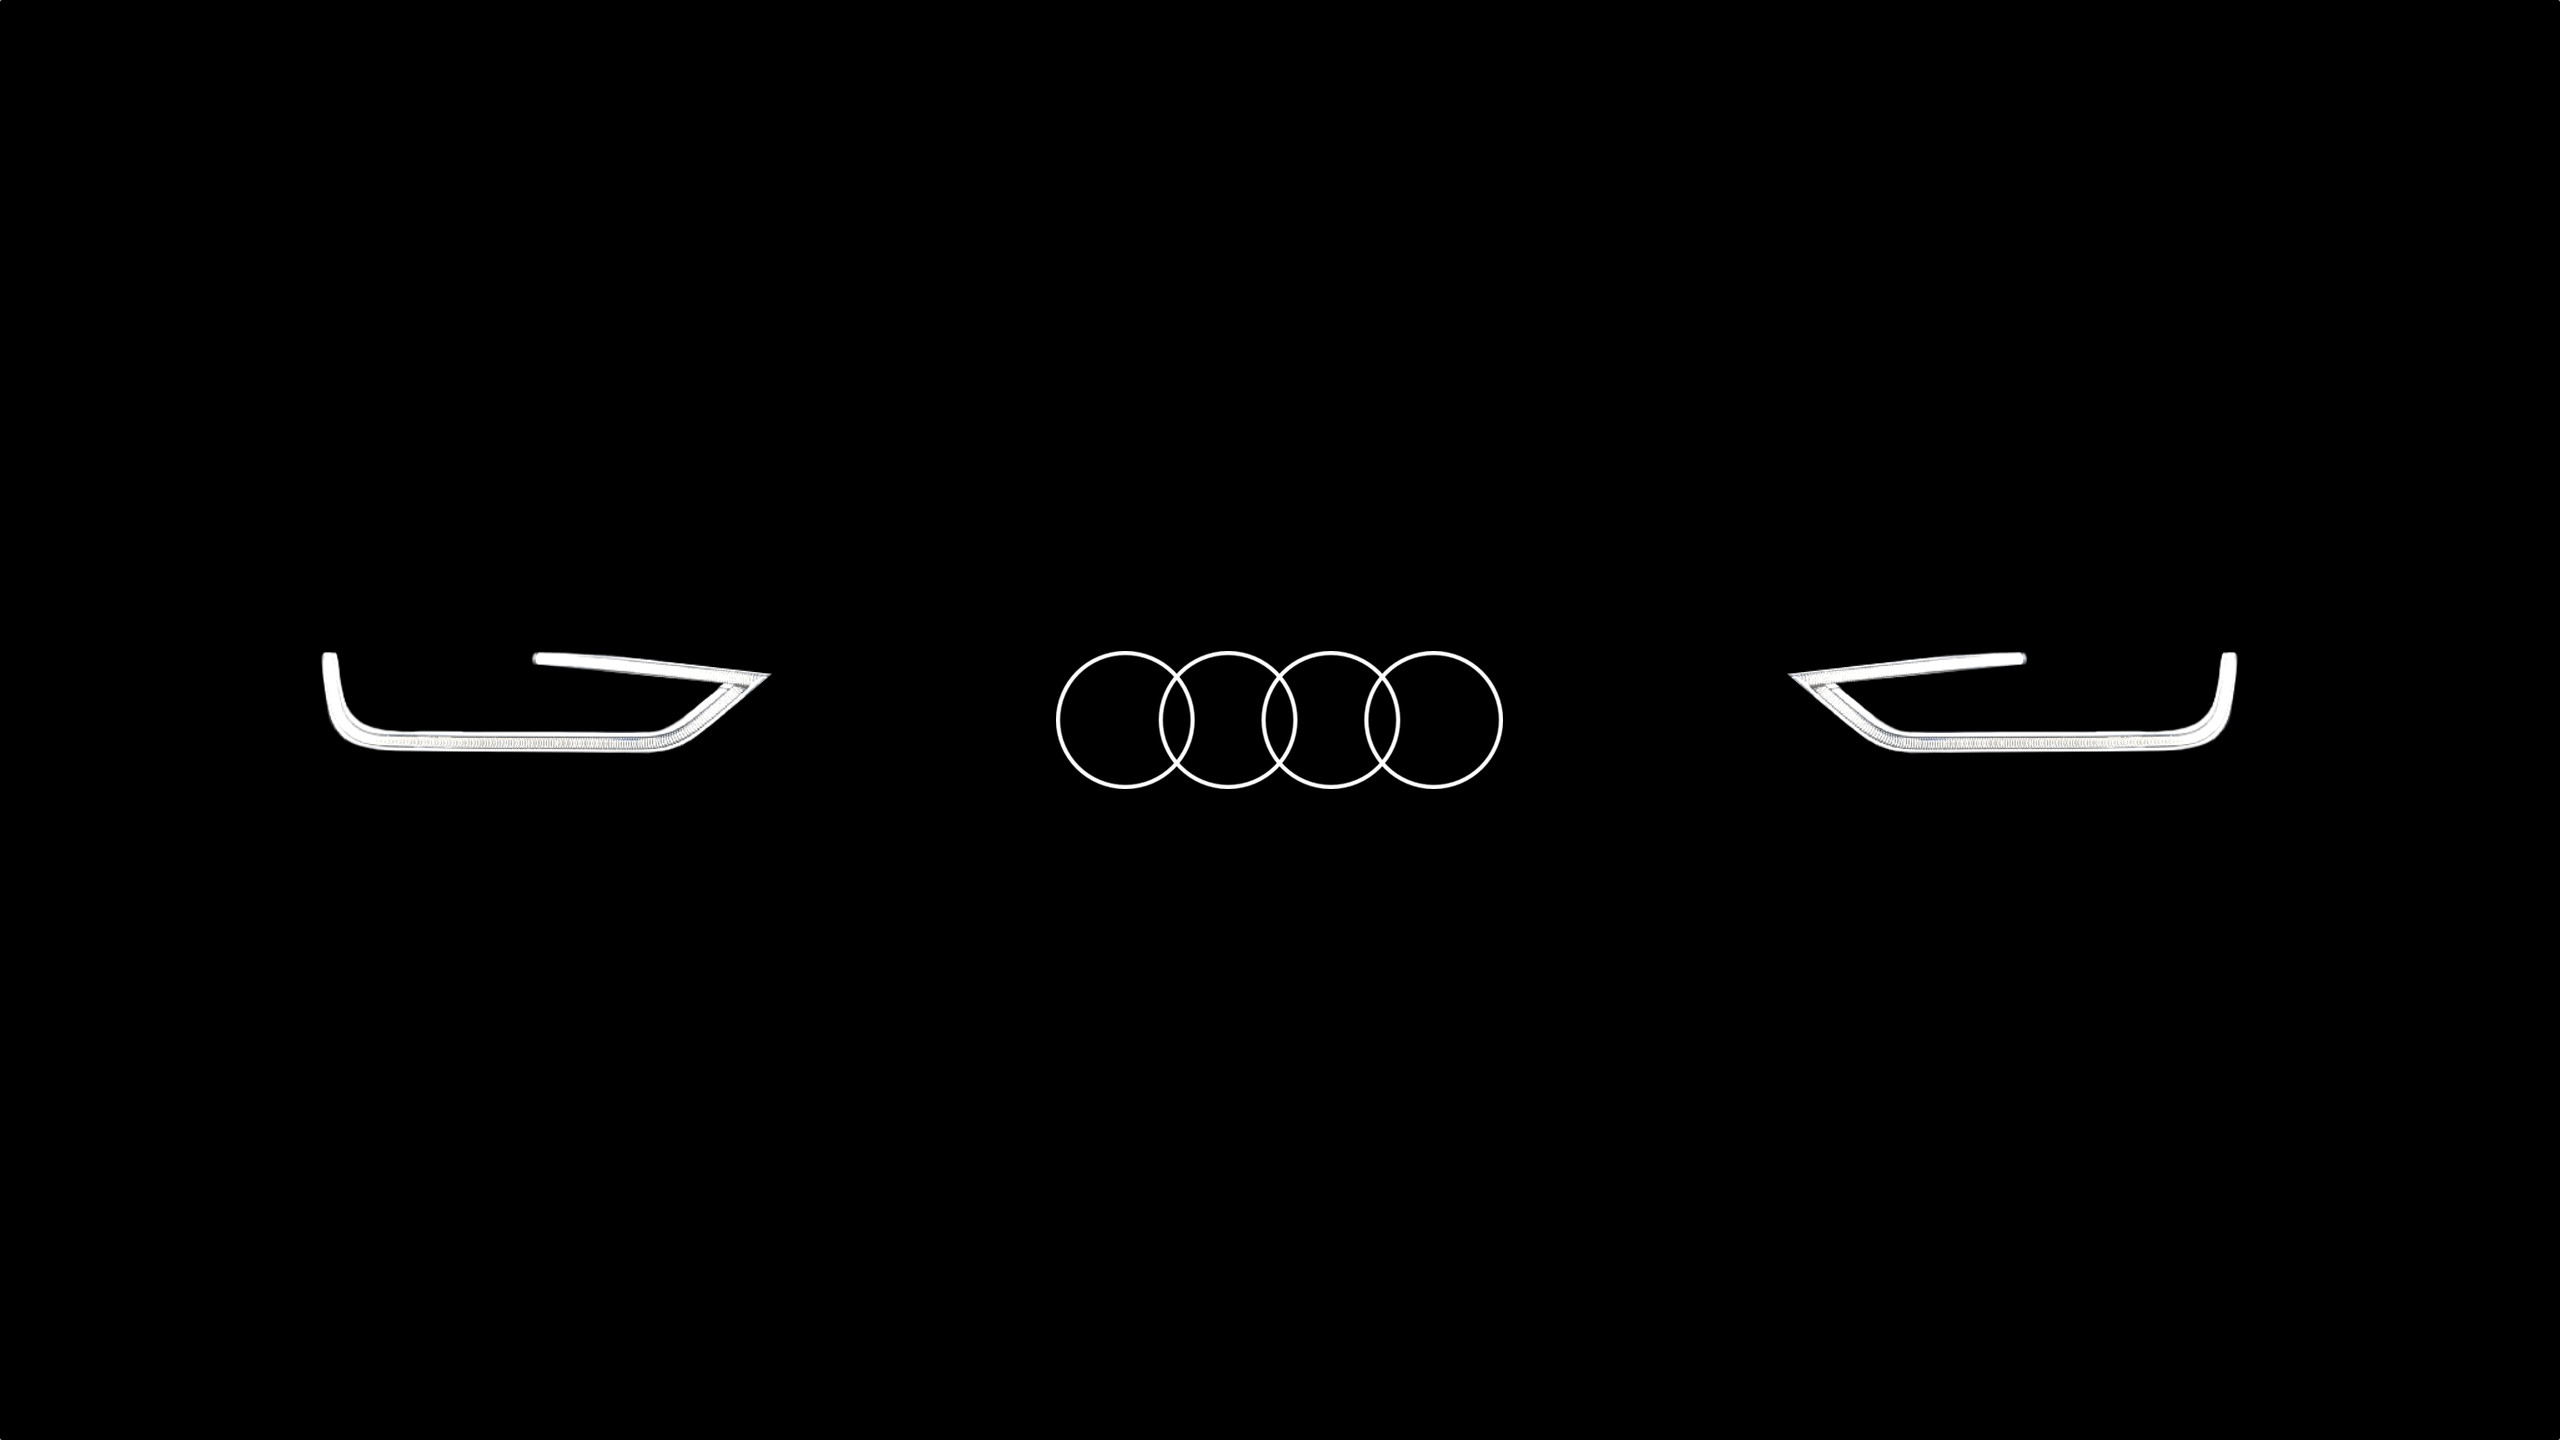 2560x1440 Audi Logo Wallpaper Hd Pixelstalk Net A4 Android